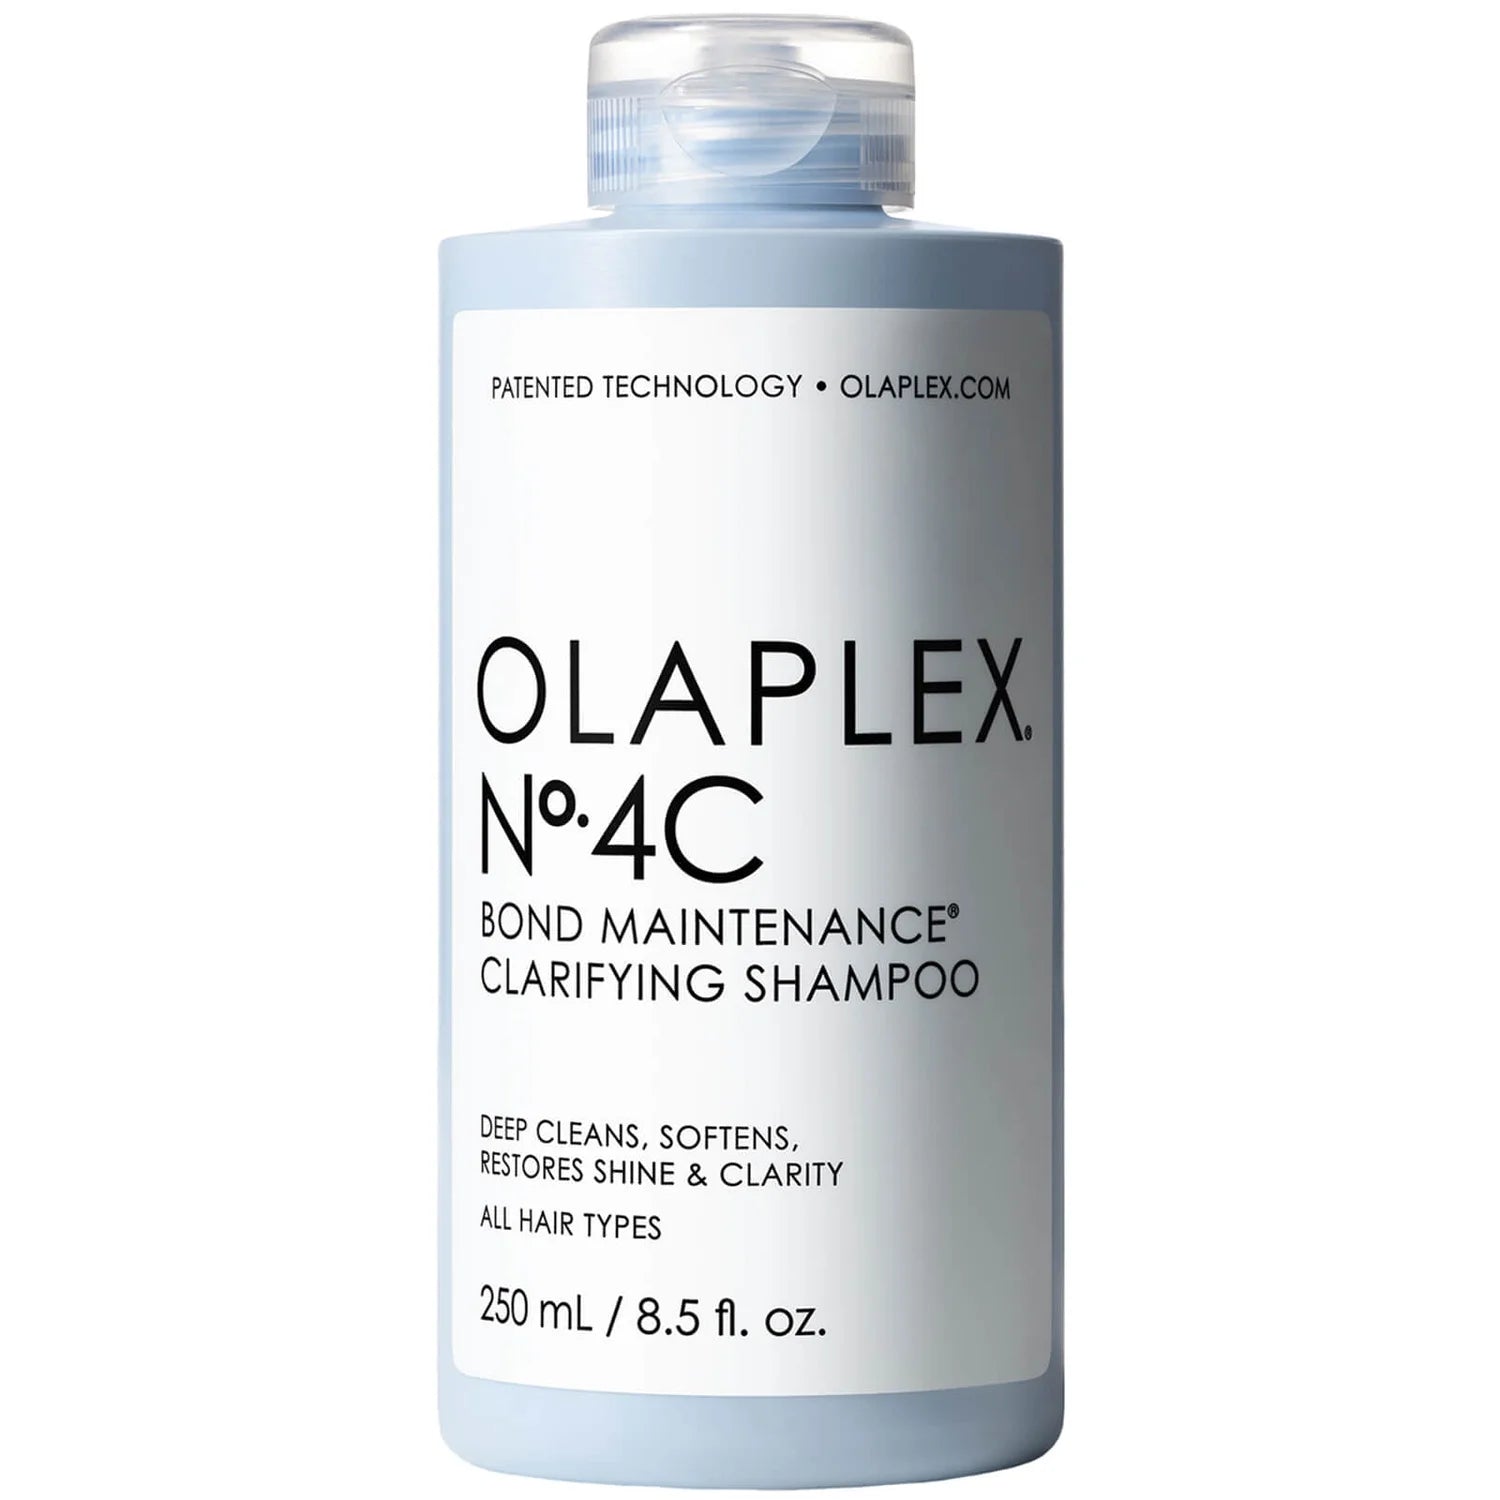 Olaplex No. 4C Bond Maintenance Clarifying Shampo - 250ml